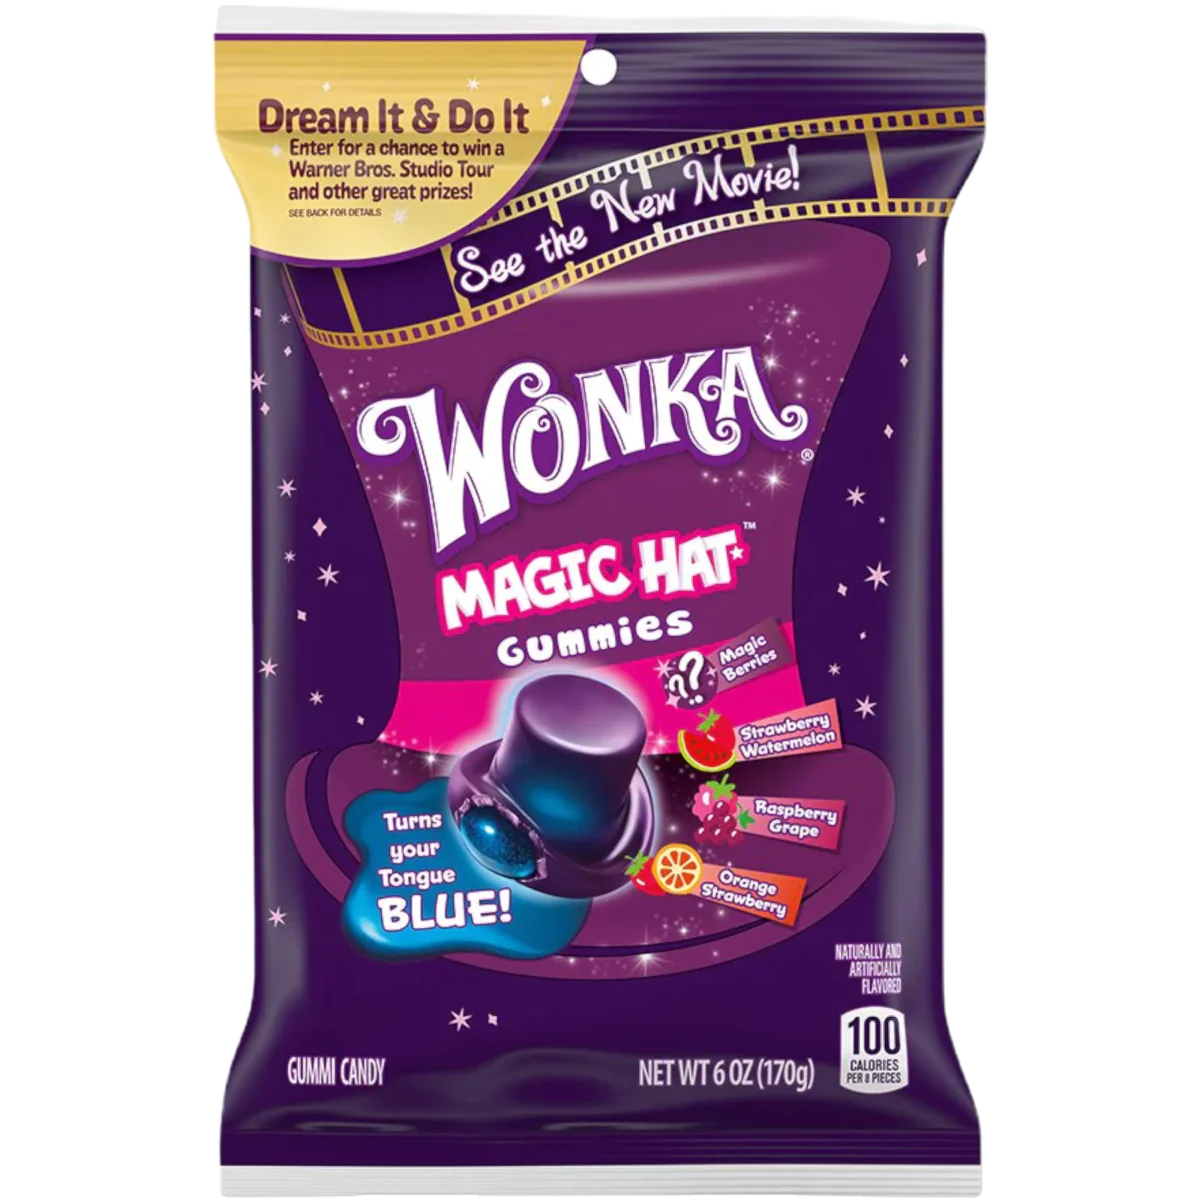 Wonka Magic Hat Gummies - 113g